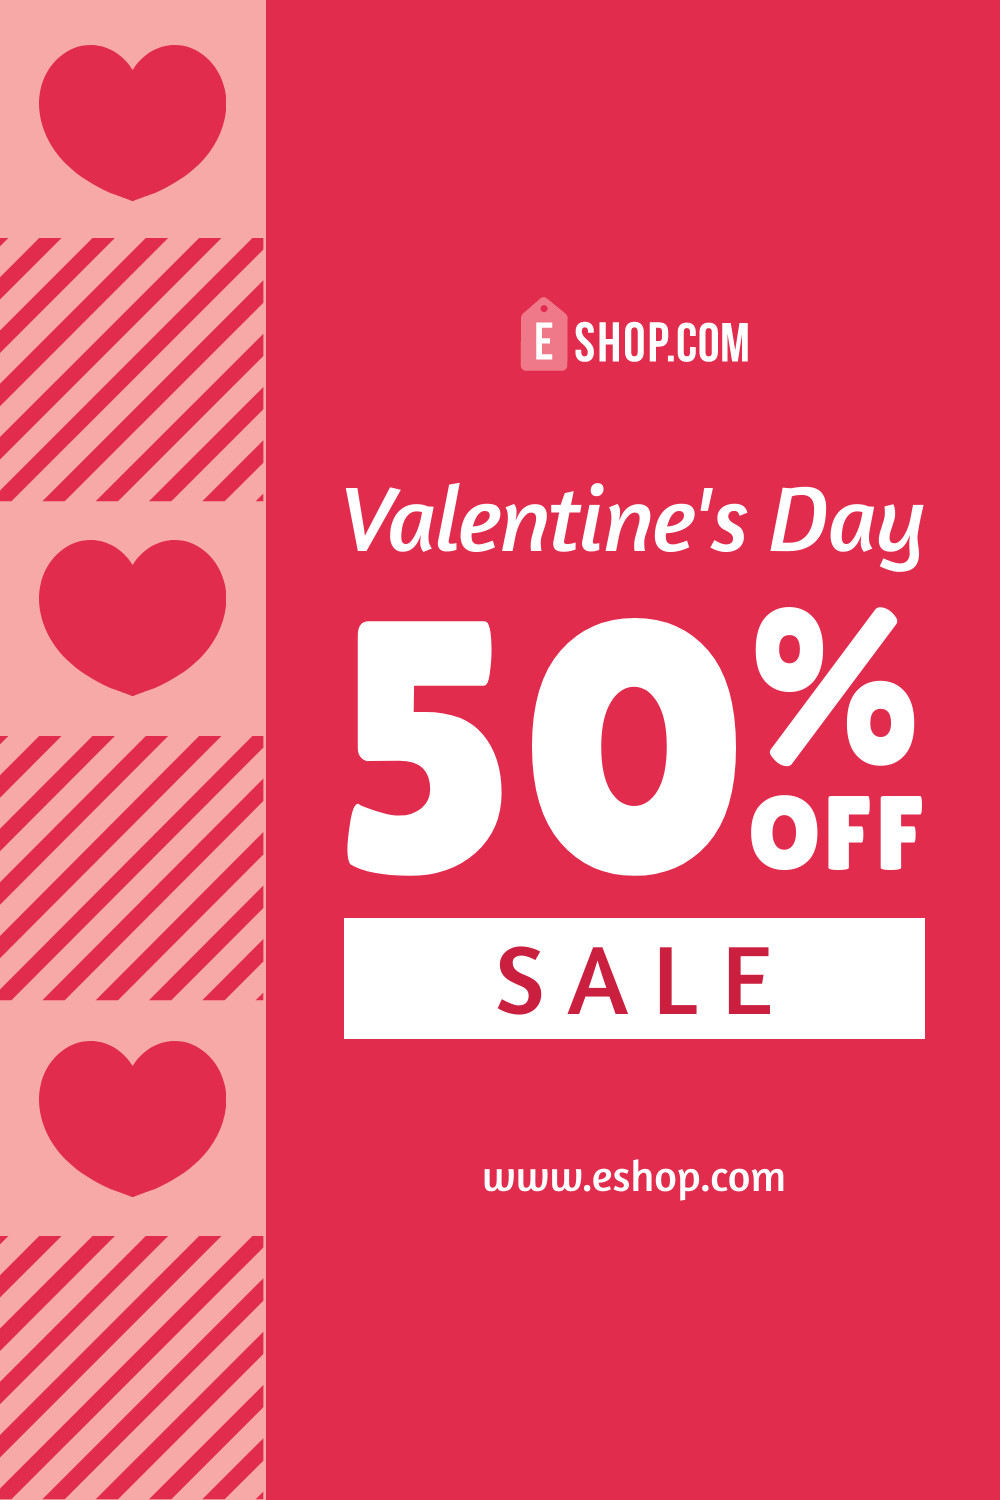 Valentine's Day Shape Sale Eshop Facebook Cover 820x360